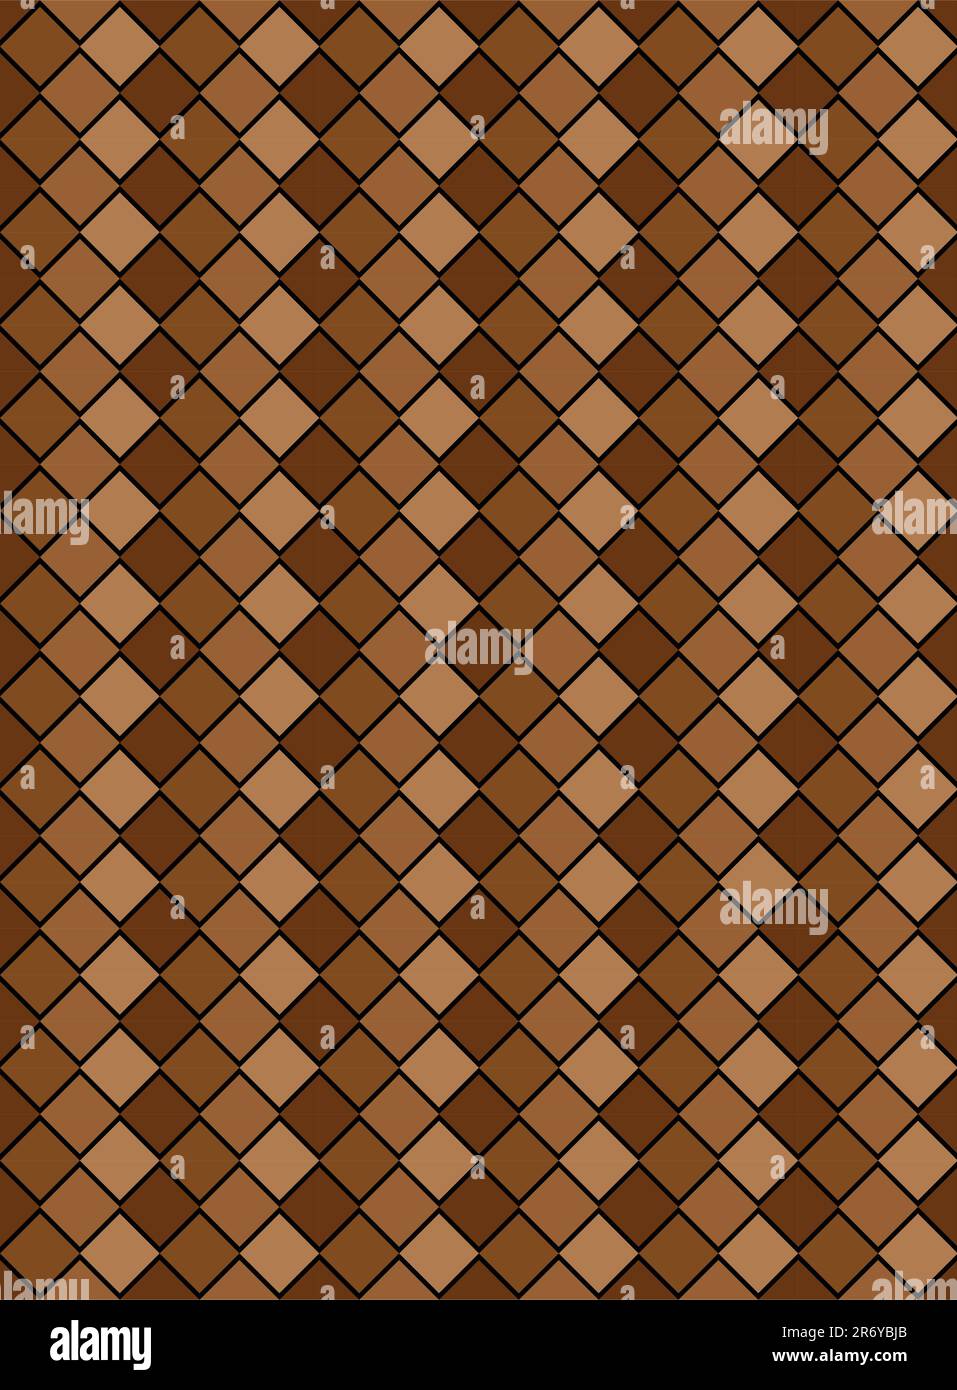 Vector eps8, brown variegated diamond snake style wallpaper texture pattern. Stock Vector